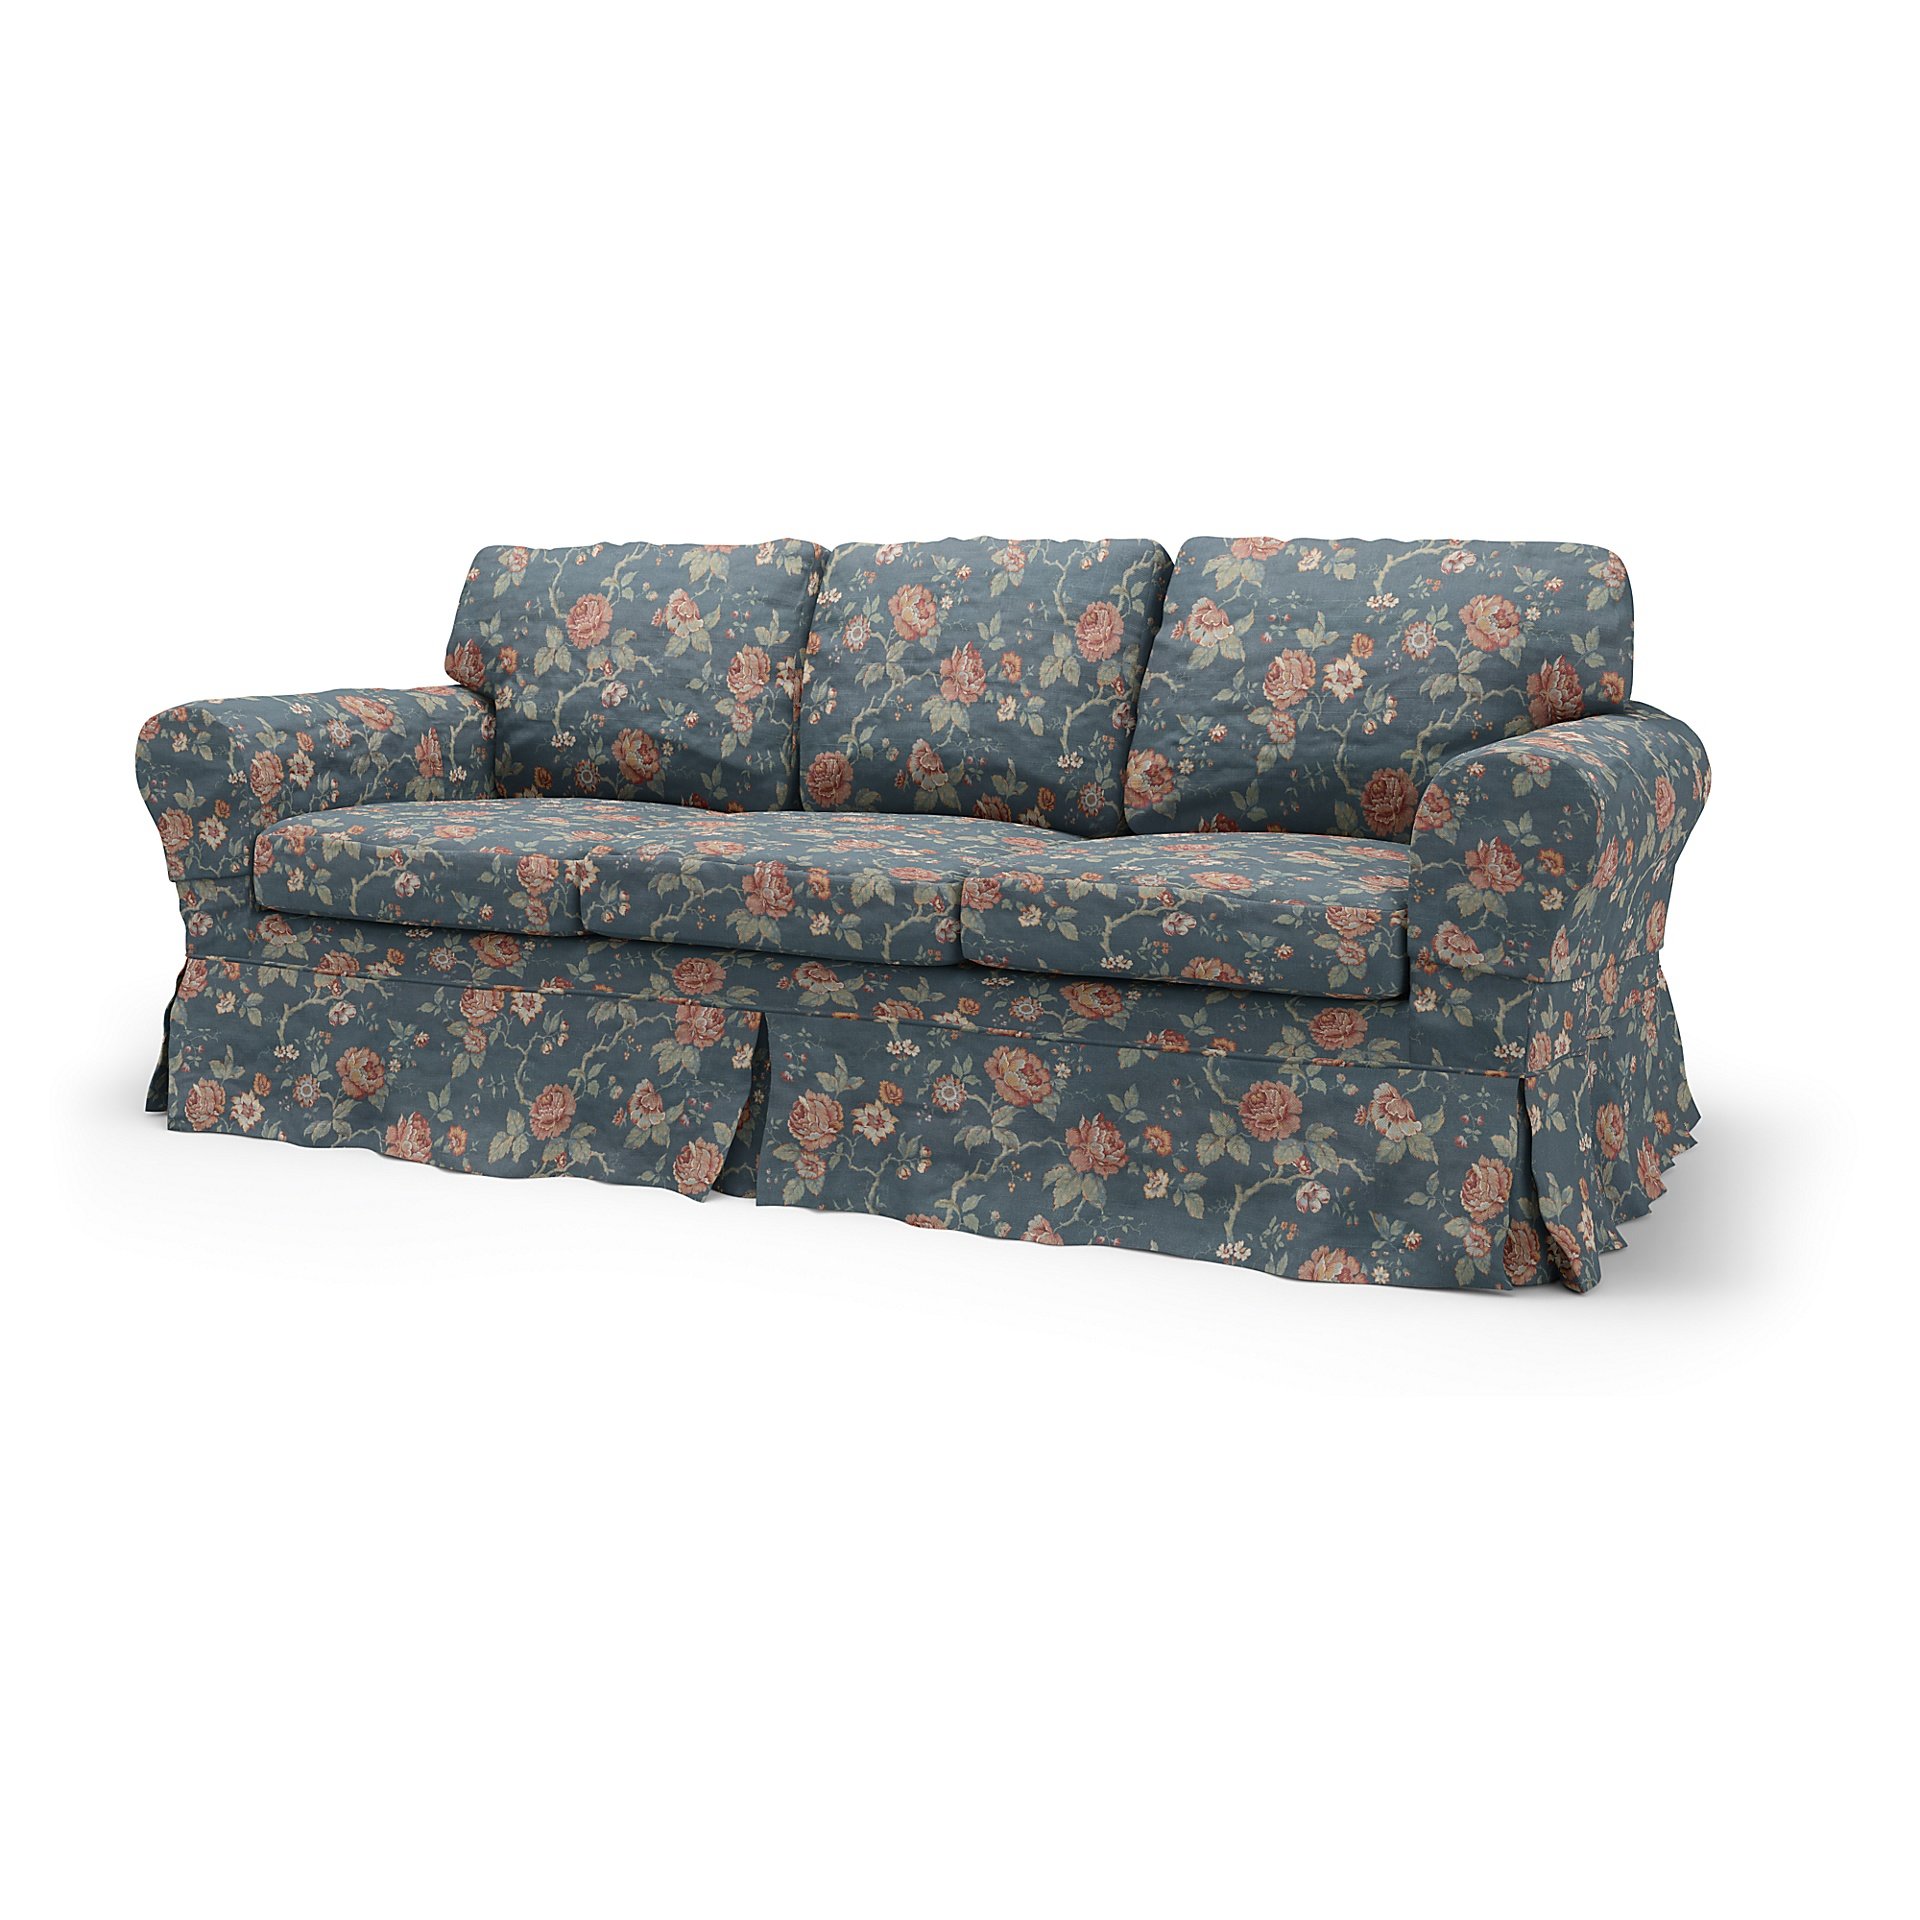 IKEA - Ektorp 3 Seater Sofa Bed Cover, Rosentrad Dark, BEMZ x BORASTAPETER COLLECTION - Bemz